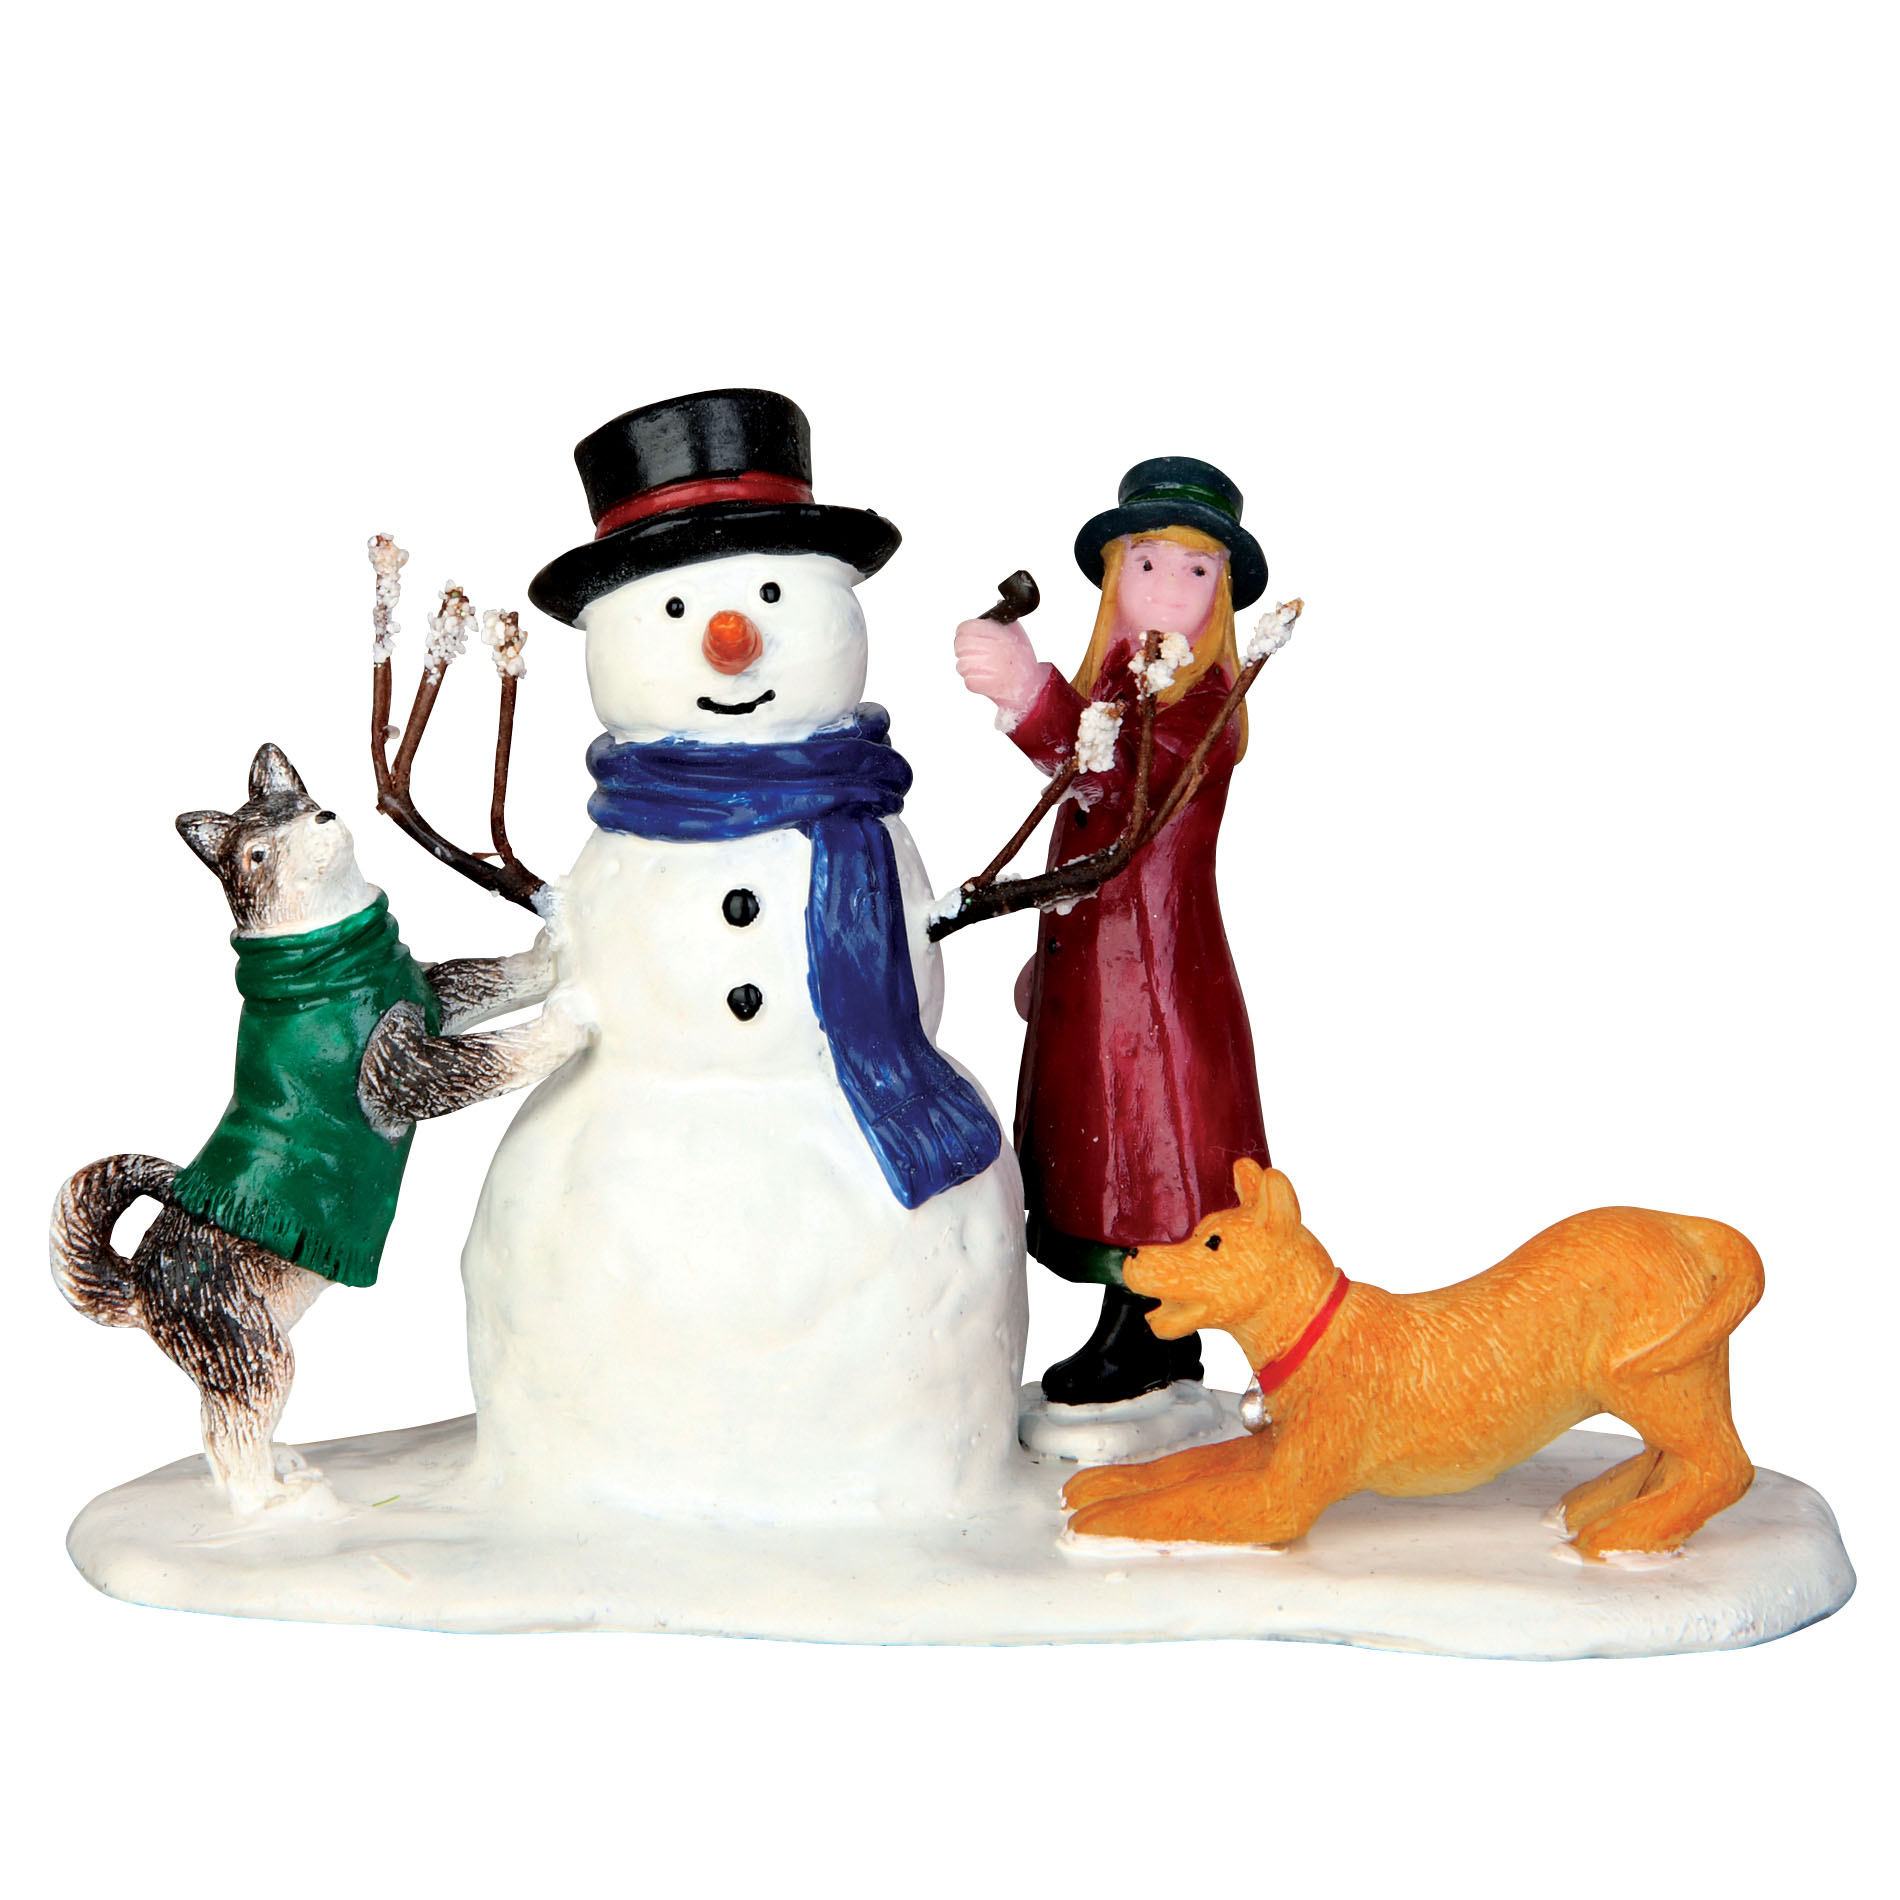 Lemax Village Collection Christmas Village Figurine, Making A Friend